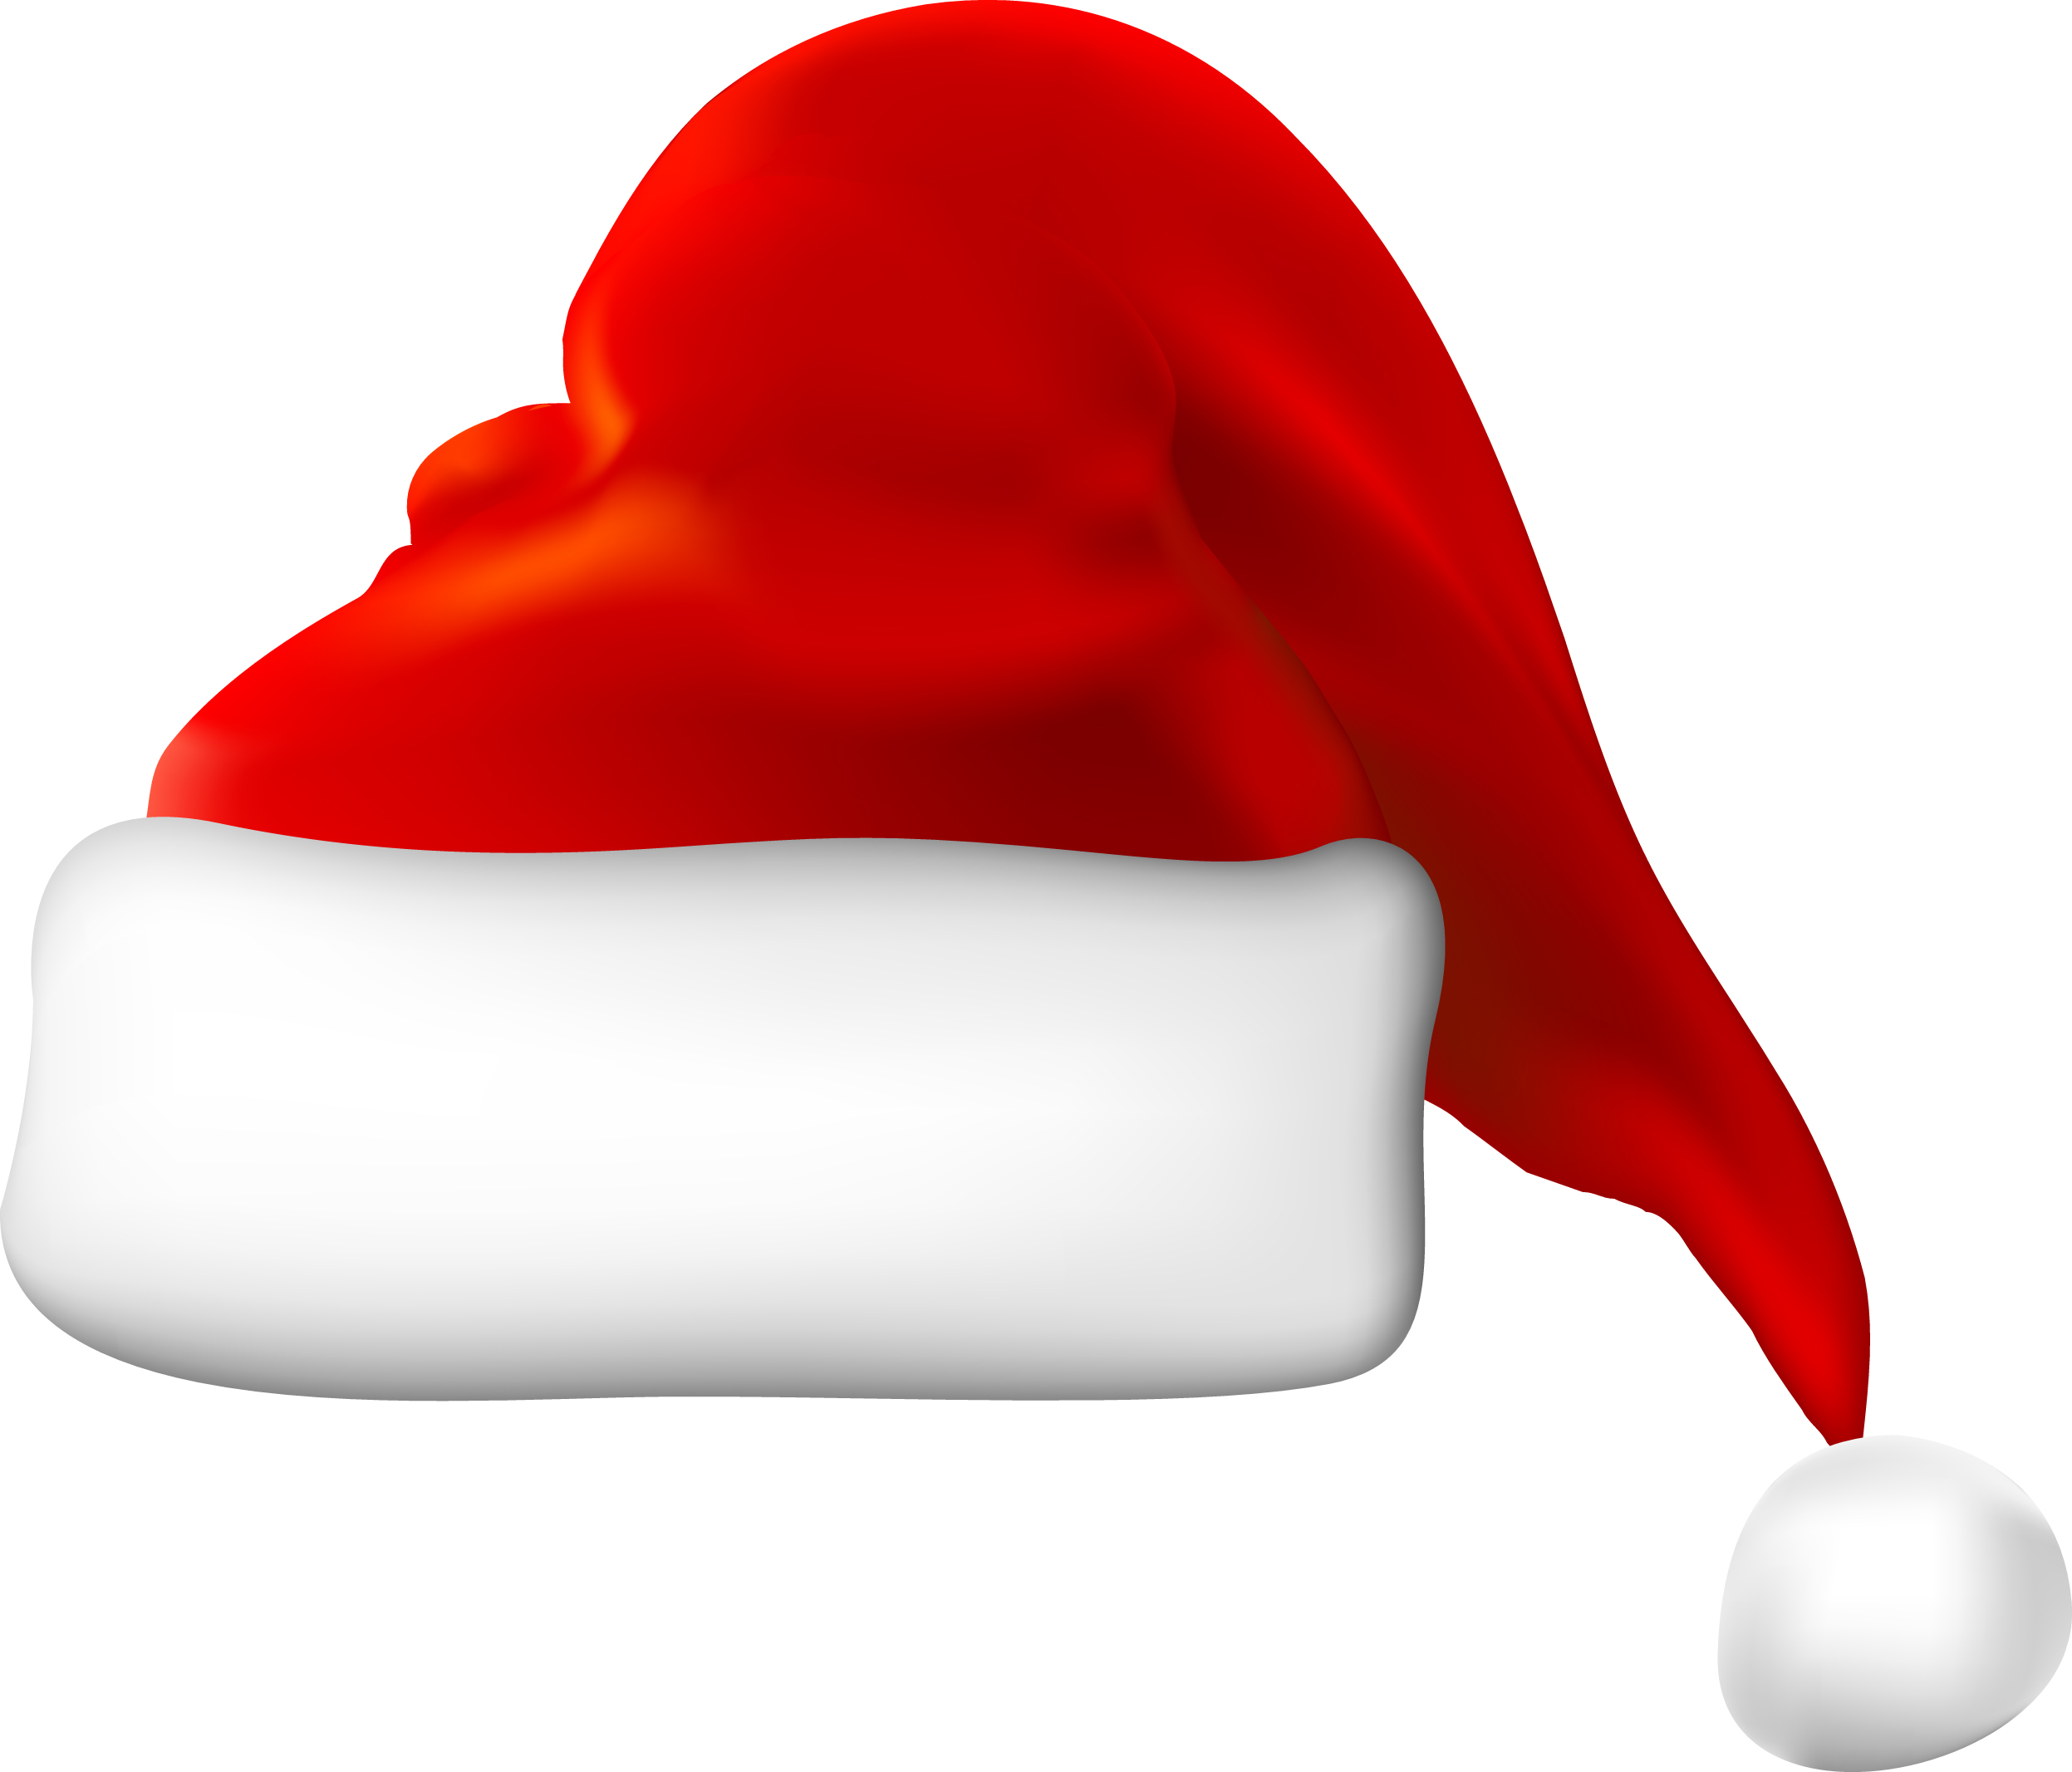 Santa hat clipart free download